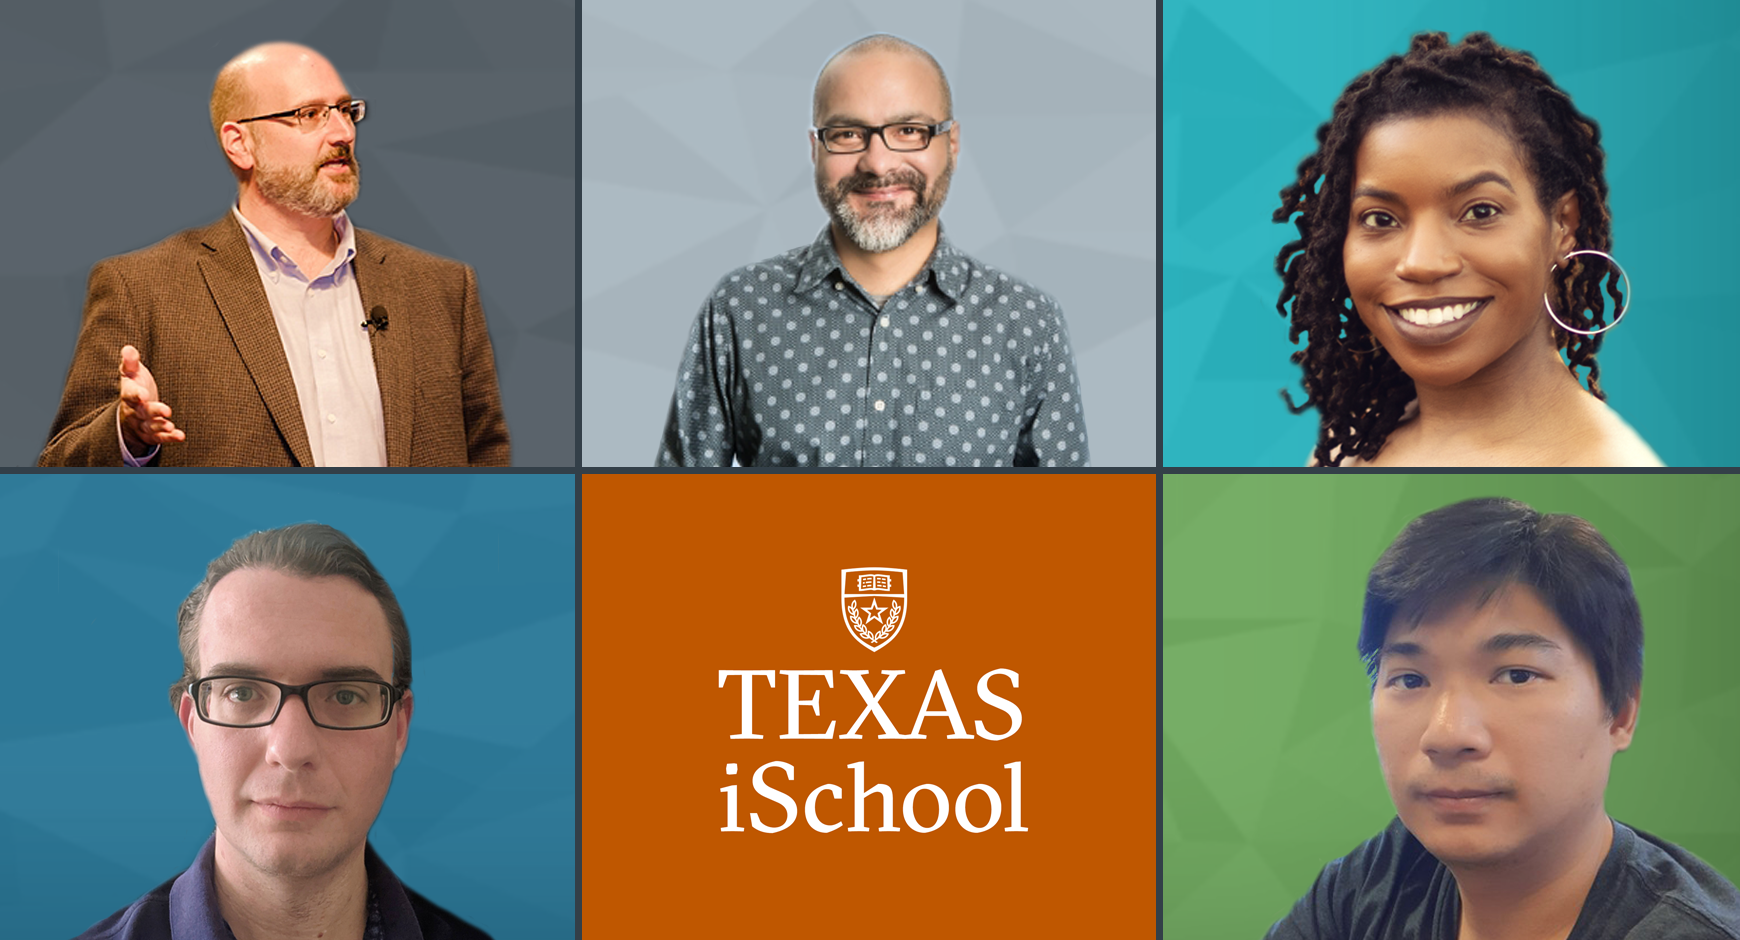 Texas iSchool Welcomes New Faculty Members